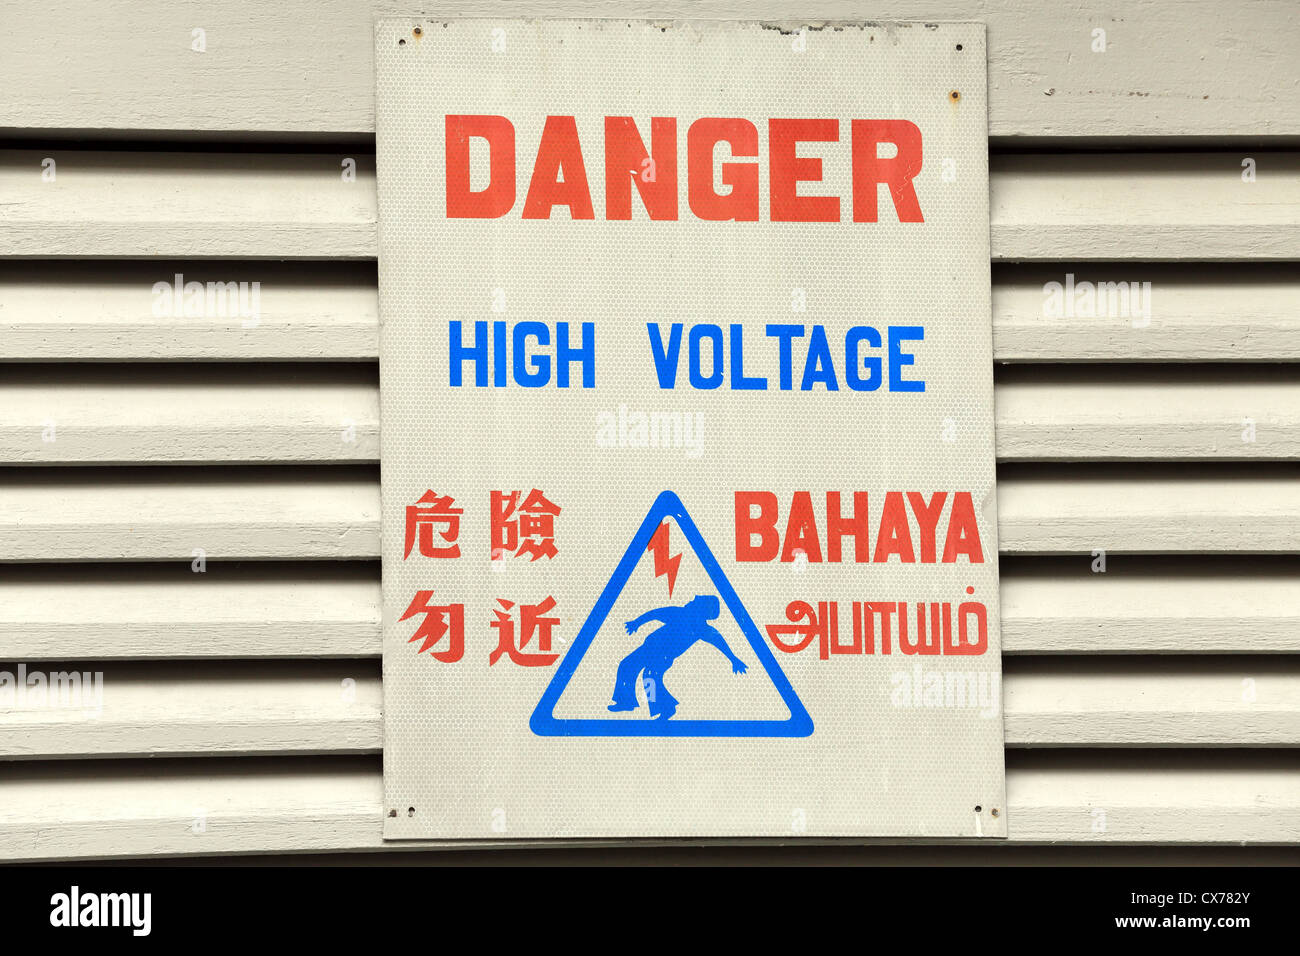 Danger high voltage warning sign Stock Photo